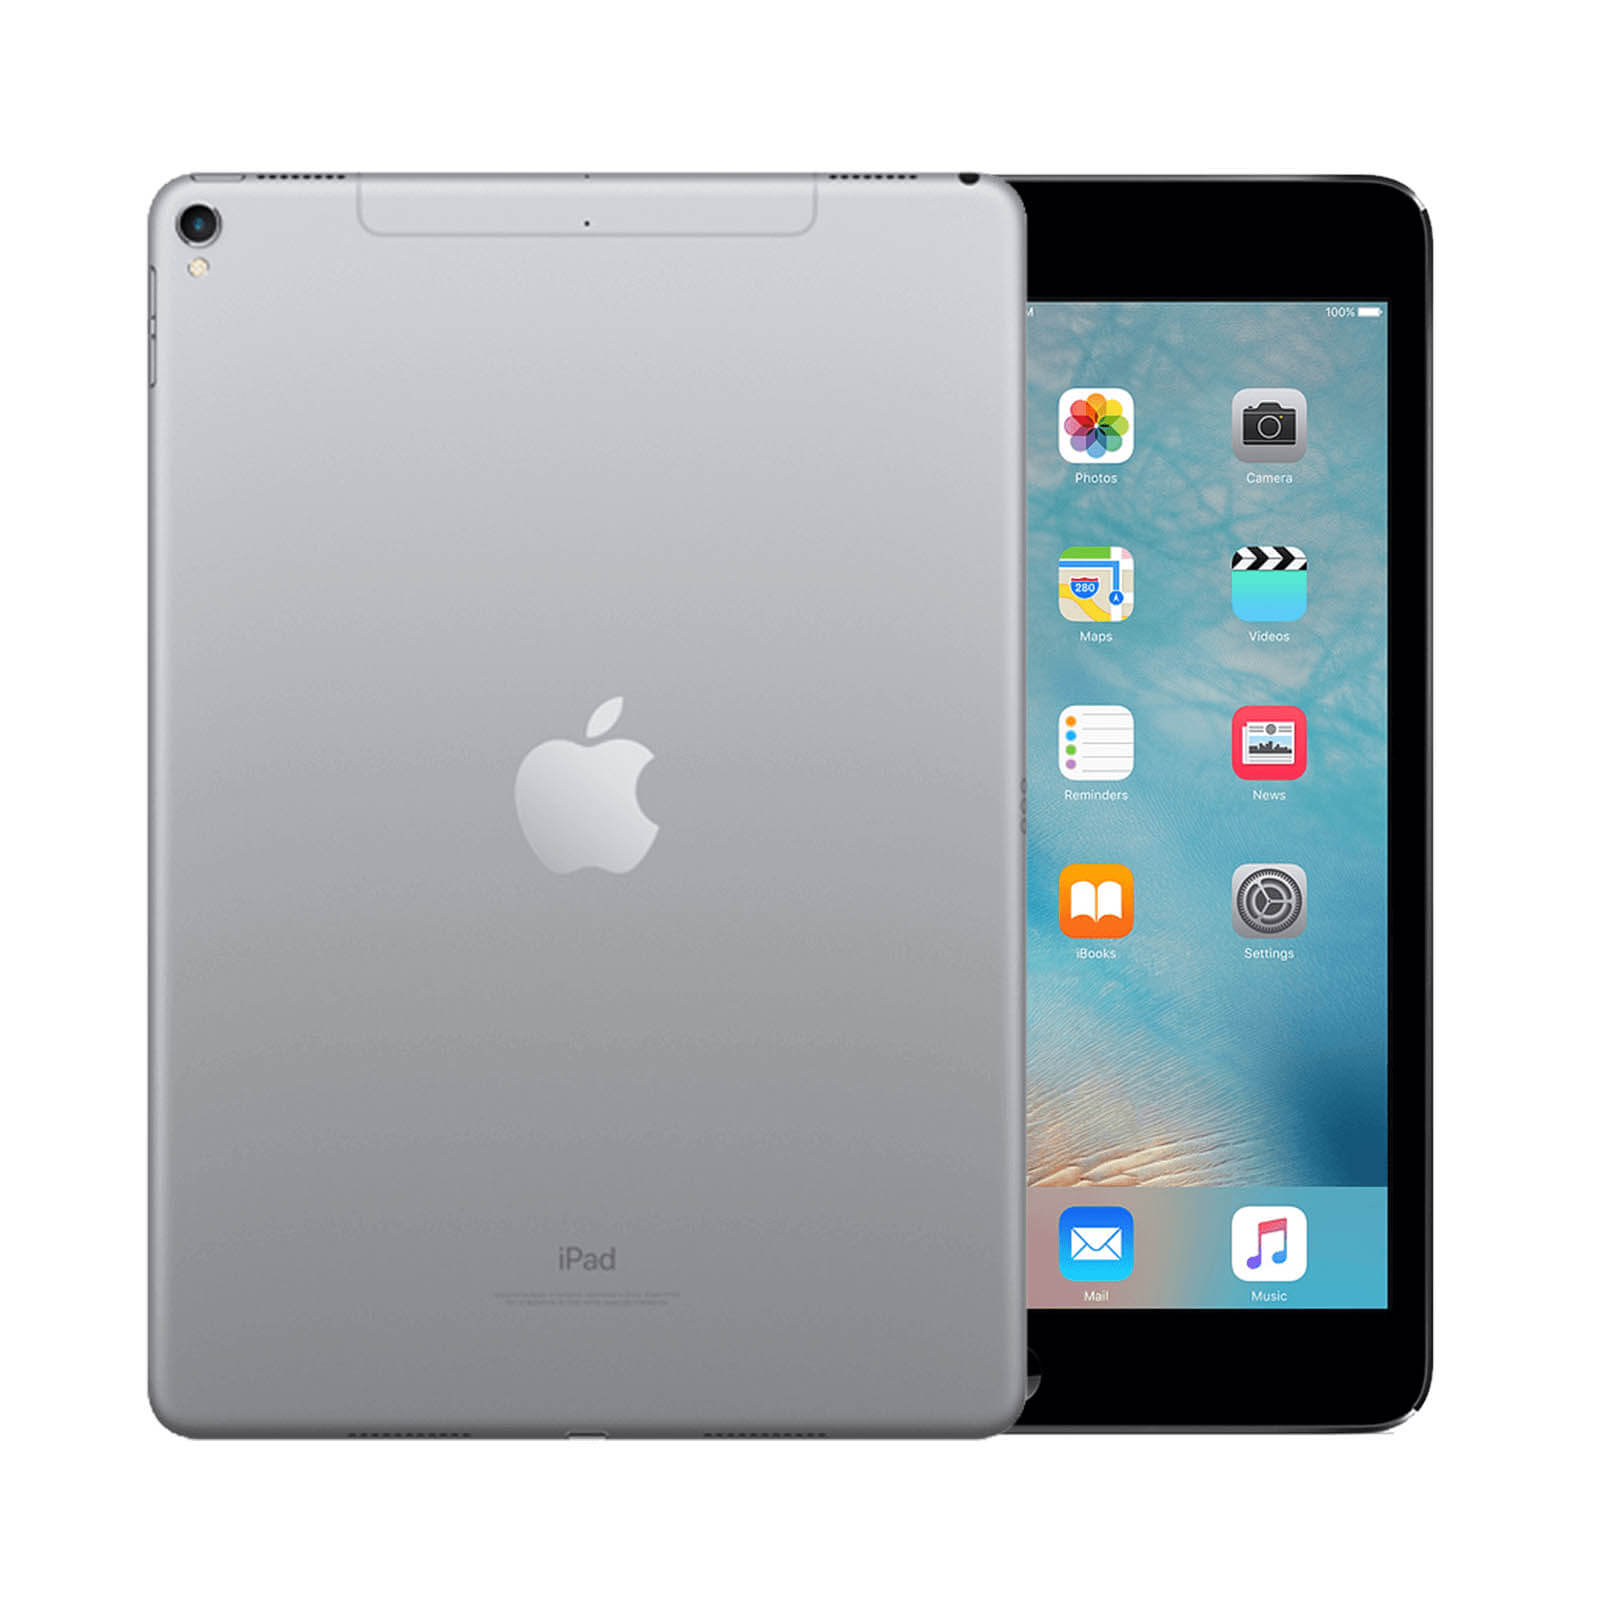 Apple iPad 7 32GB WiFi Space Grey Very Good 32GB Space Grey Very Good